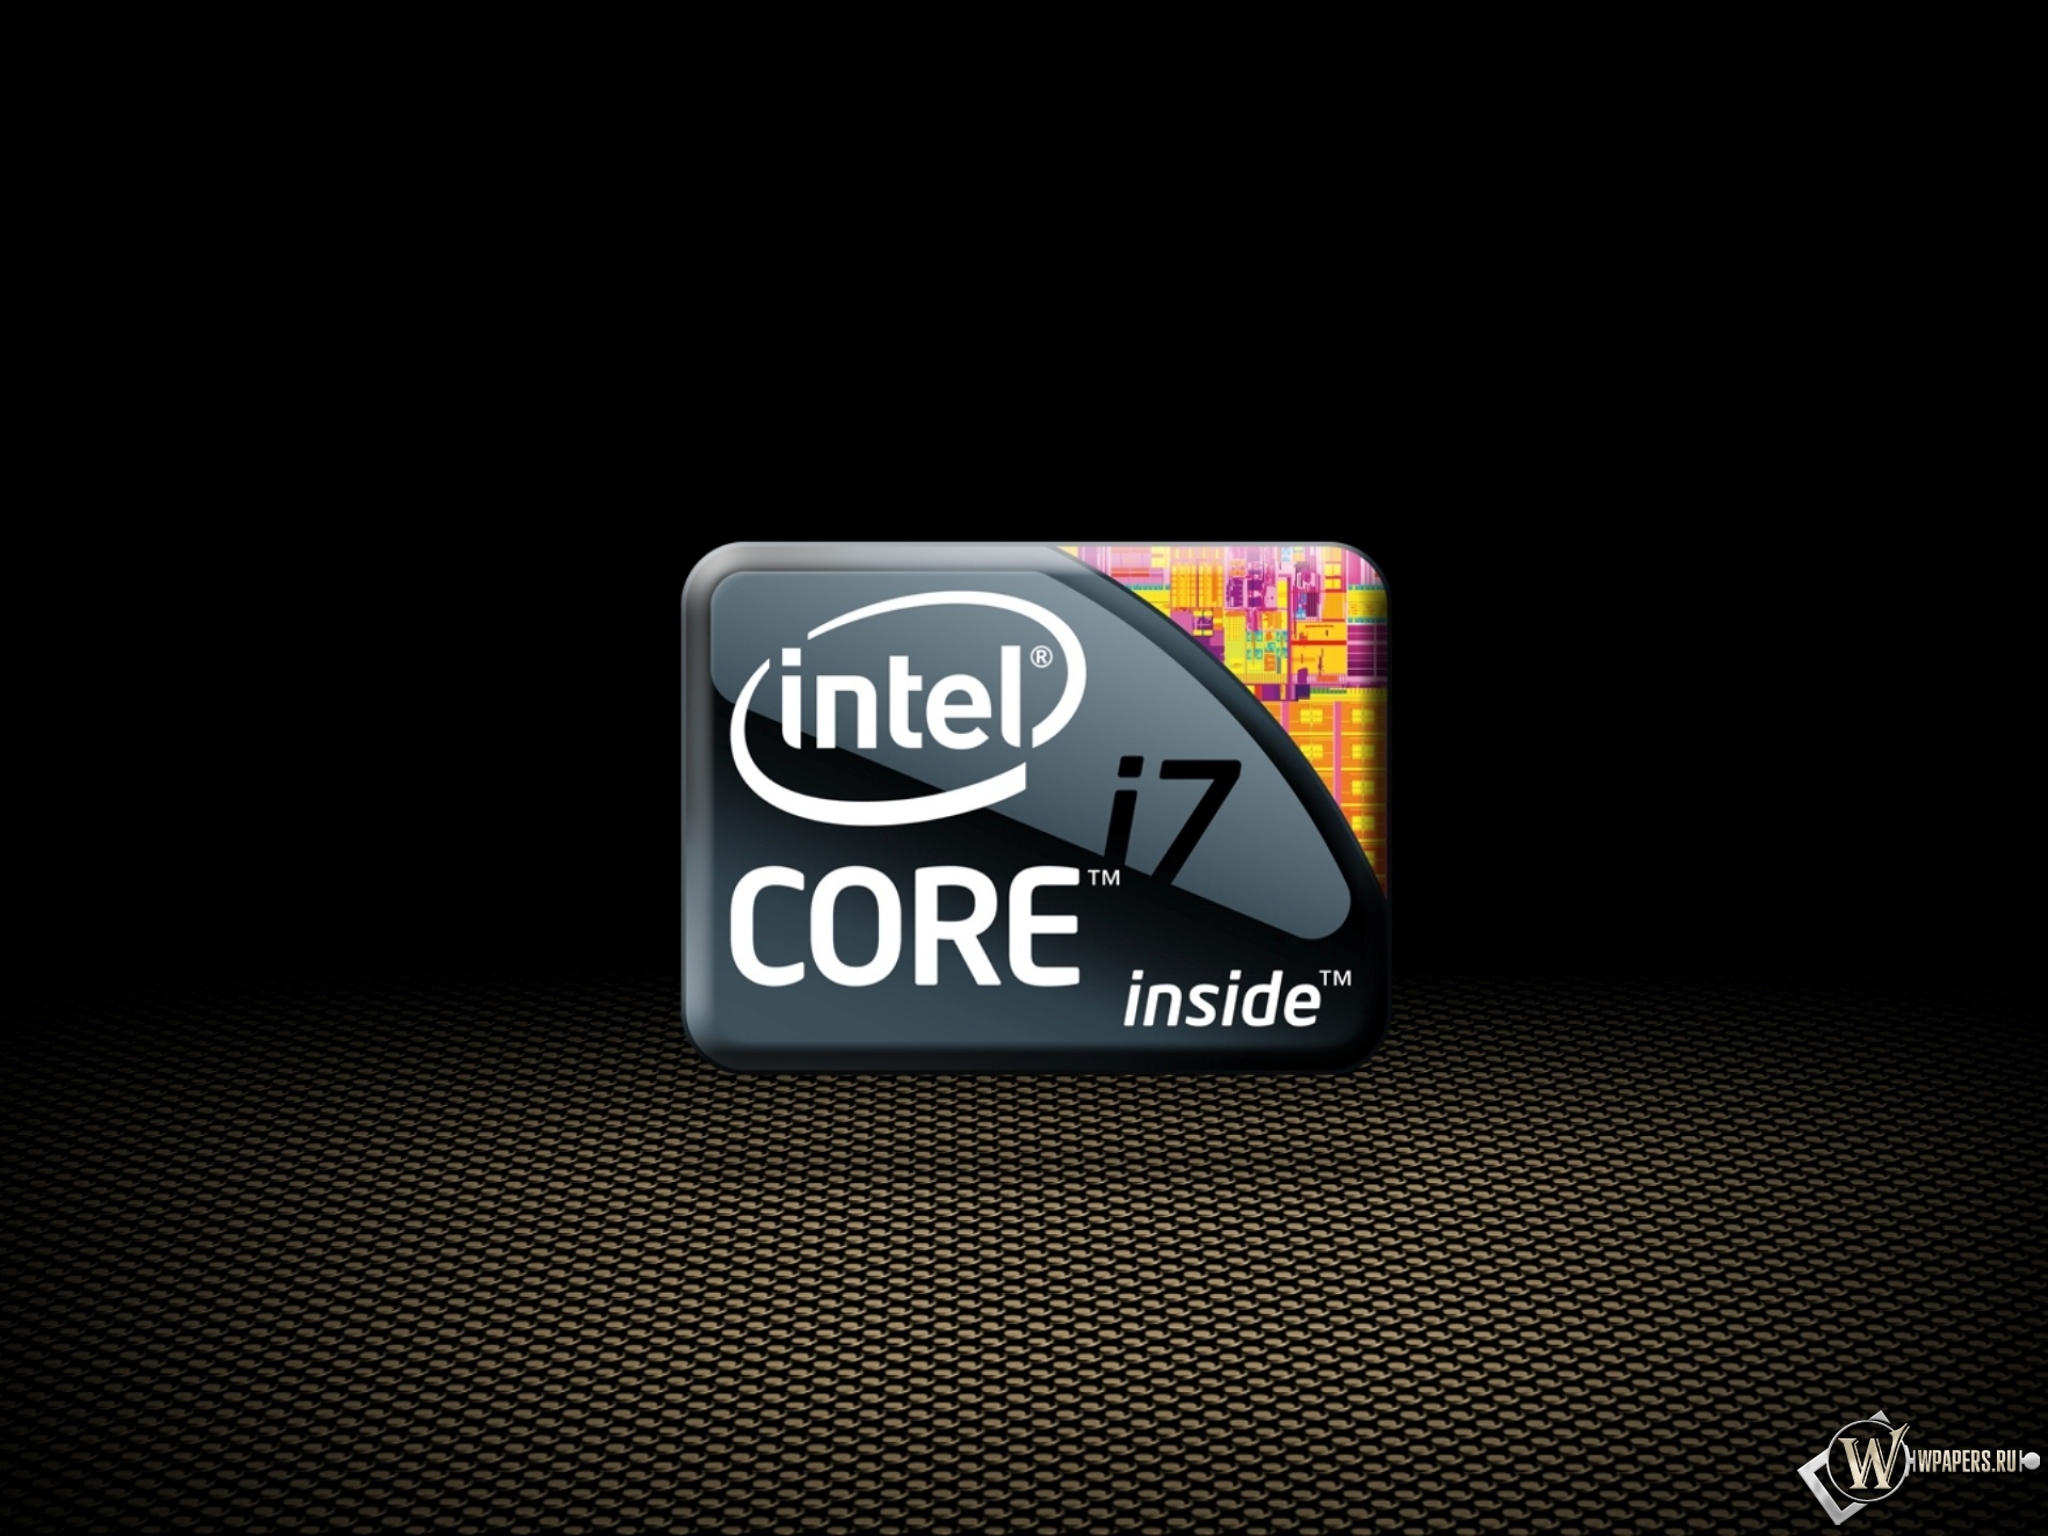 Intel Core i7 2048x1536